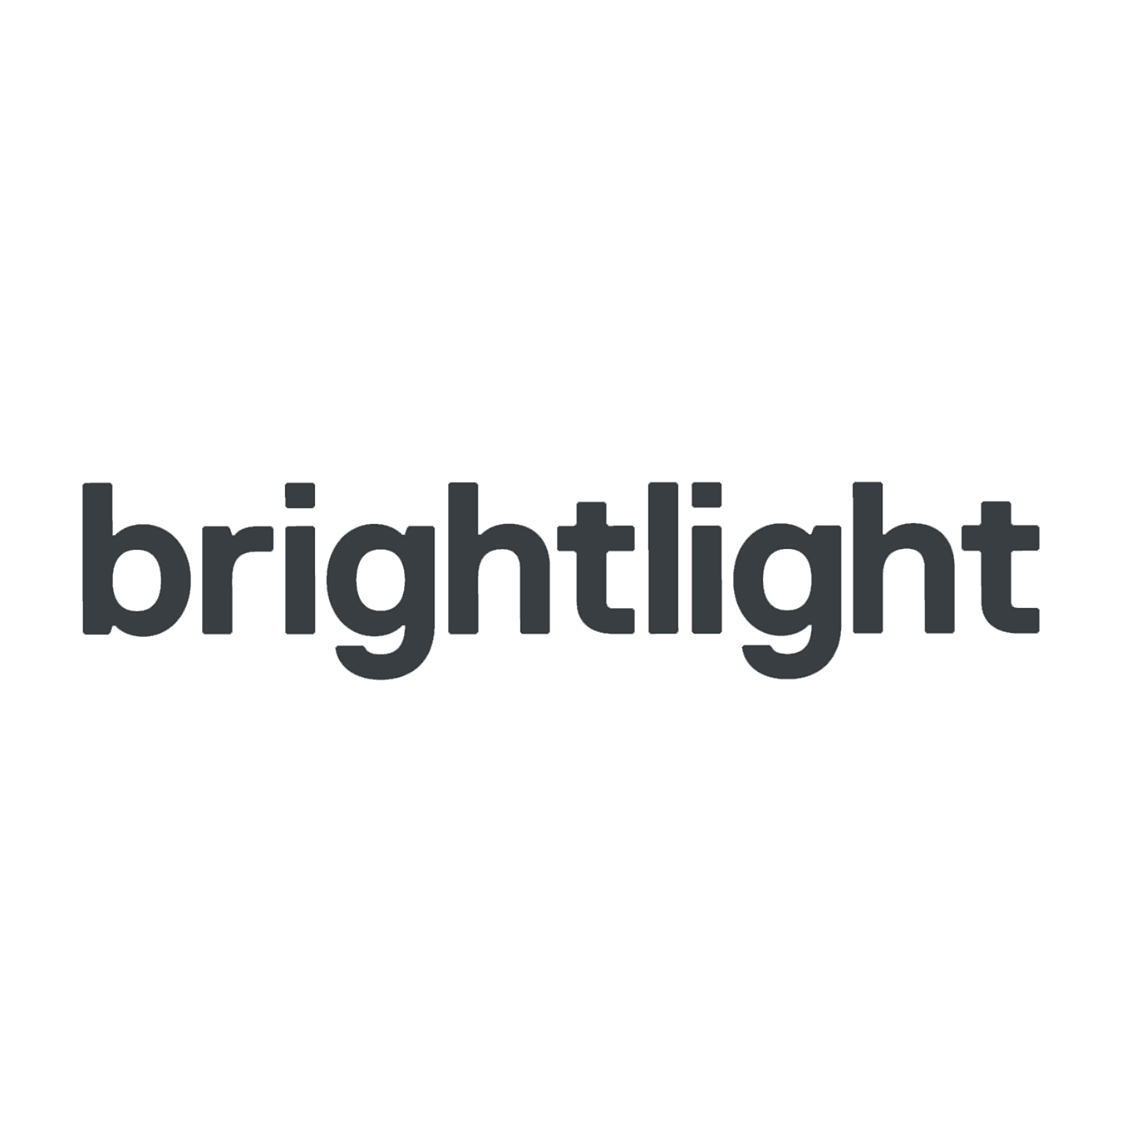 Brightlight Studio - Web Design Waterford